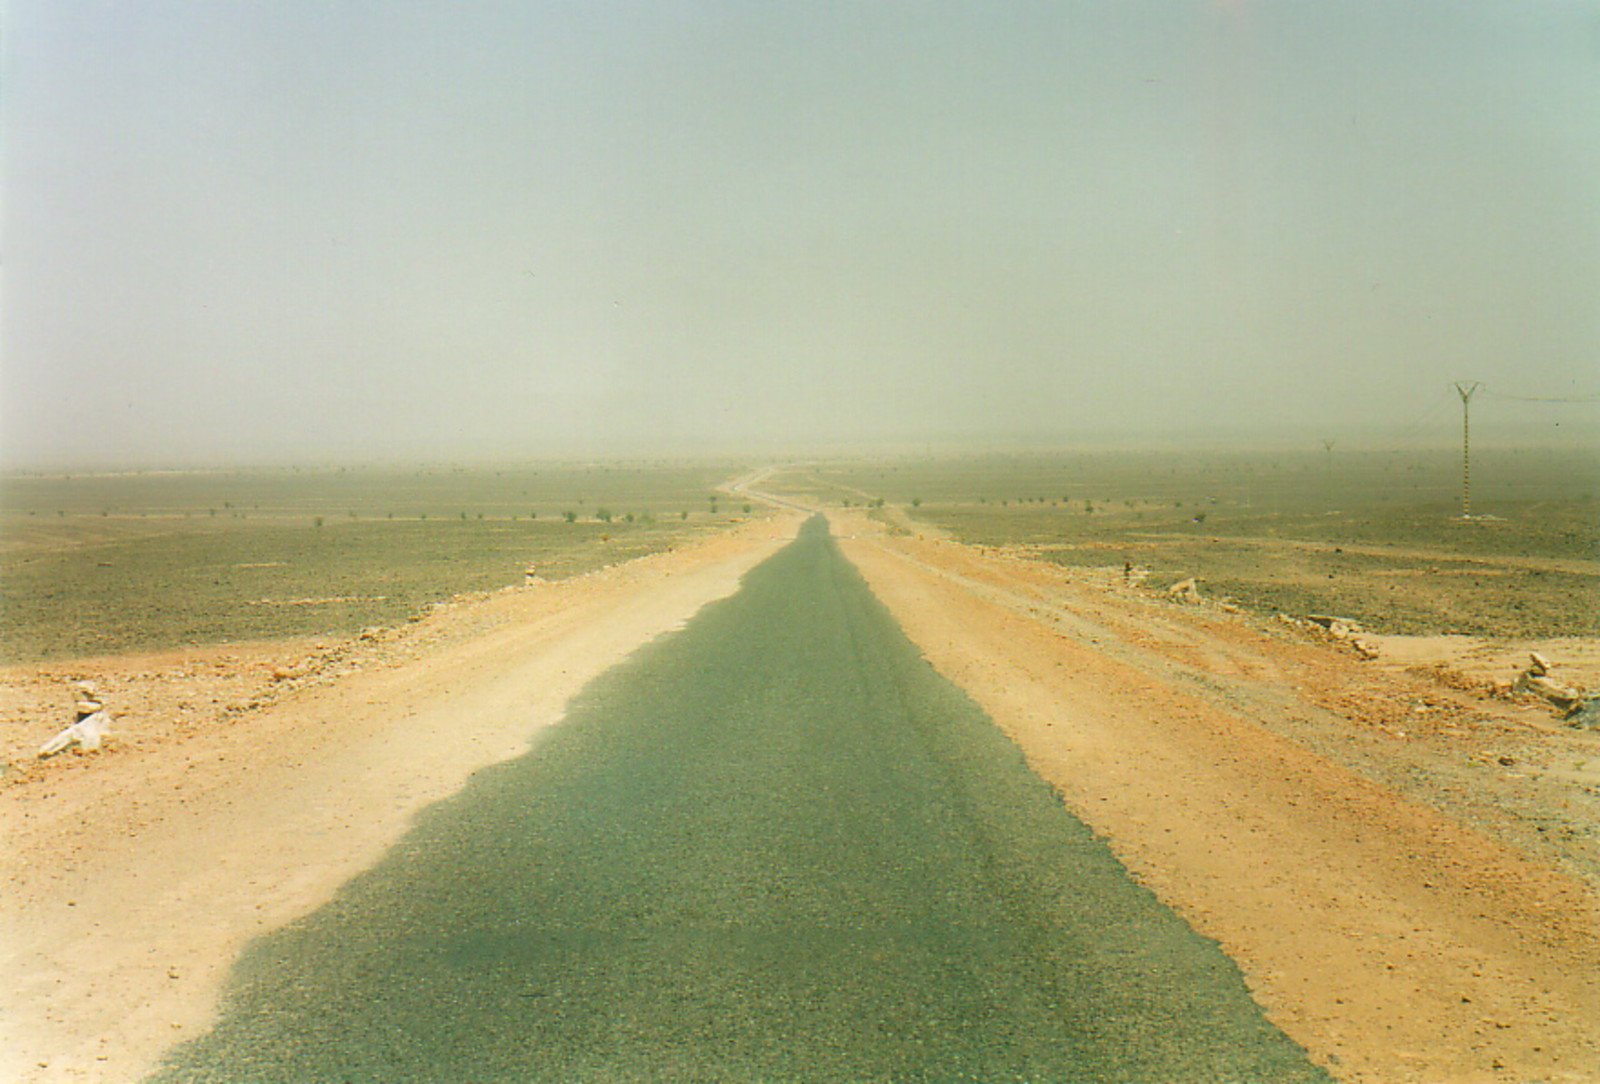 A single-track road through the desert